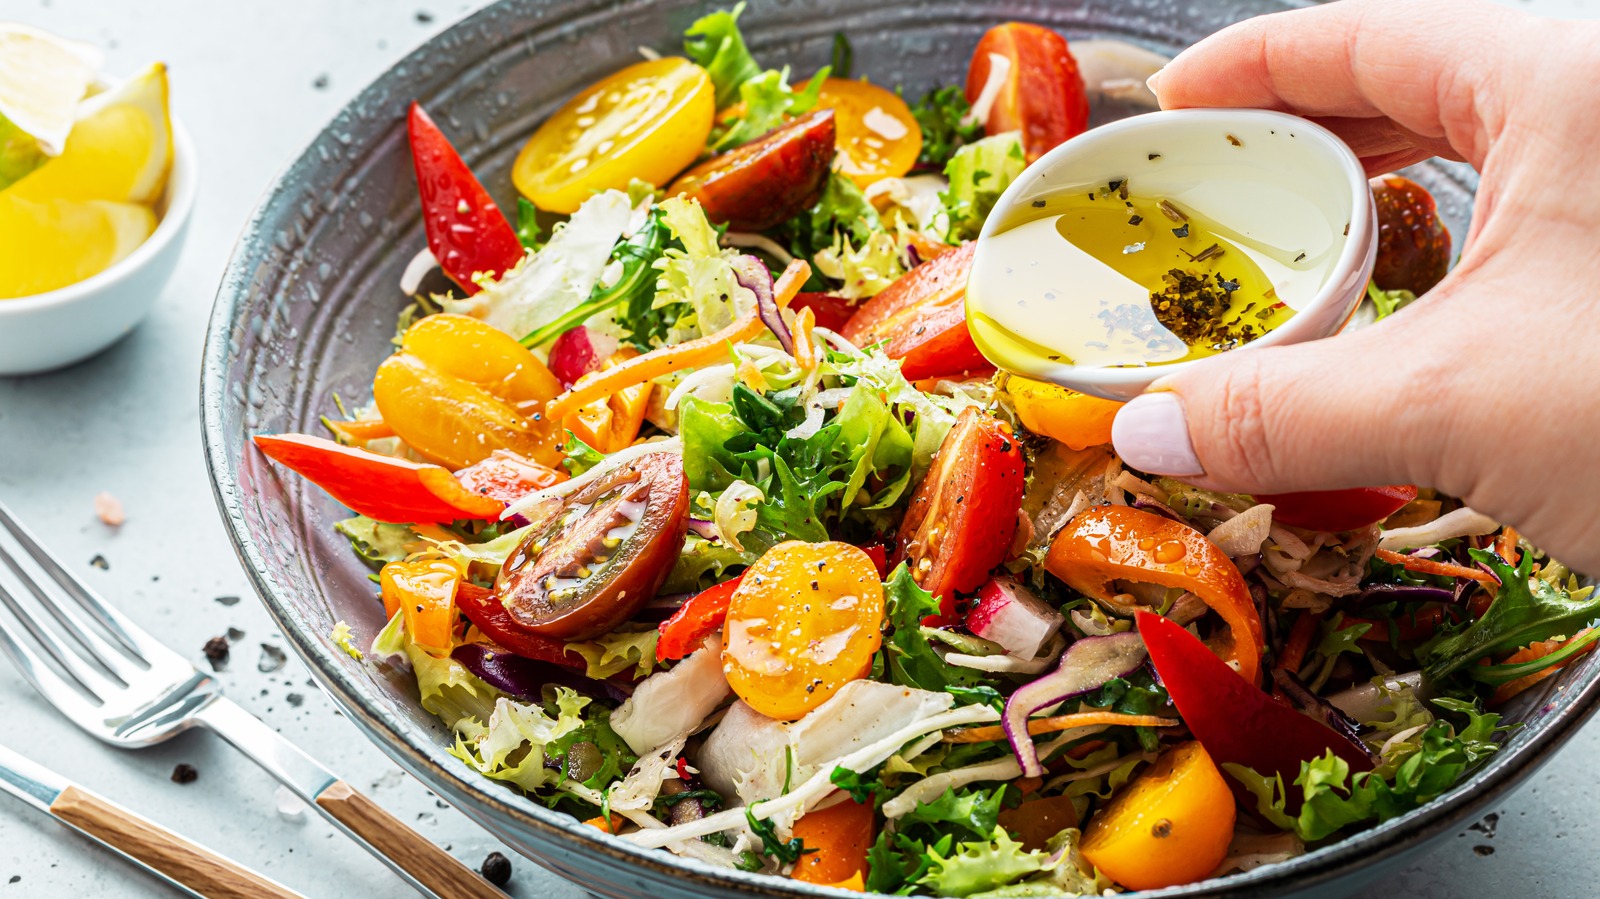 Salad and Go Healthy Fast Food Drive-Thru Salad Restaurant Tour